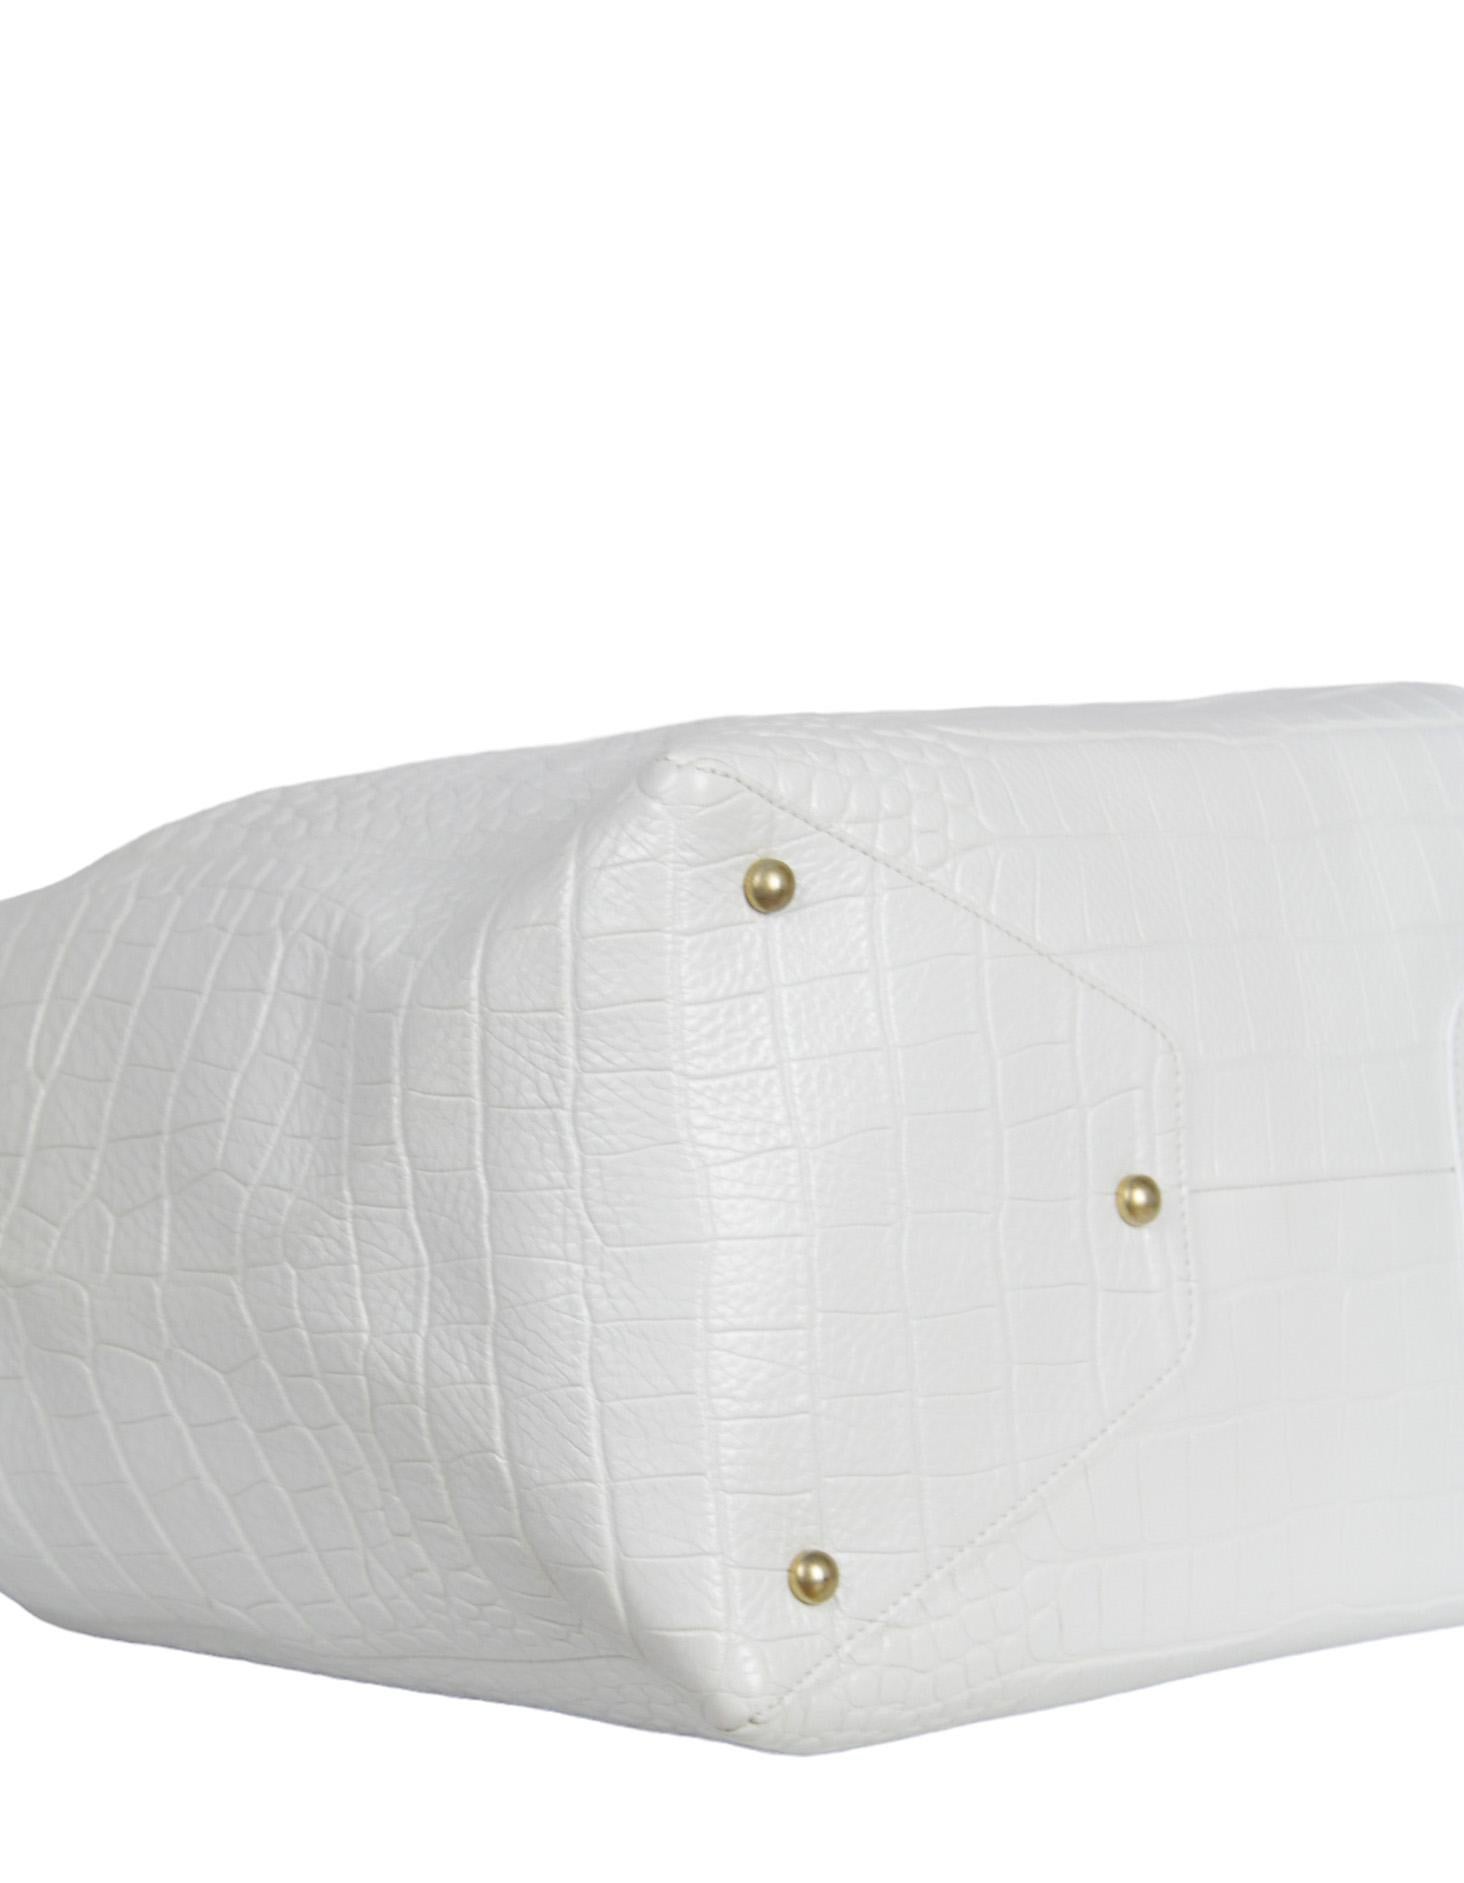 Chanel Paris-New York grand sac fourre-tout Coco en crocodile embossé blanc 2